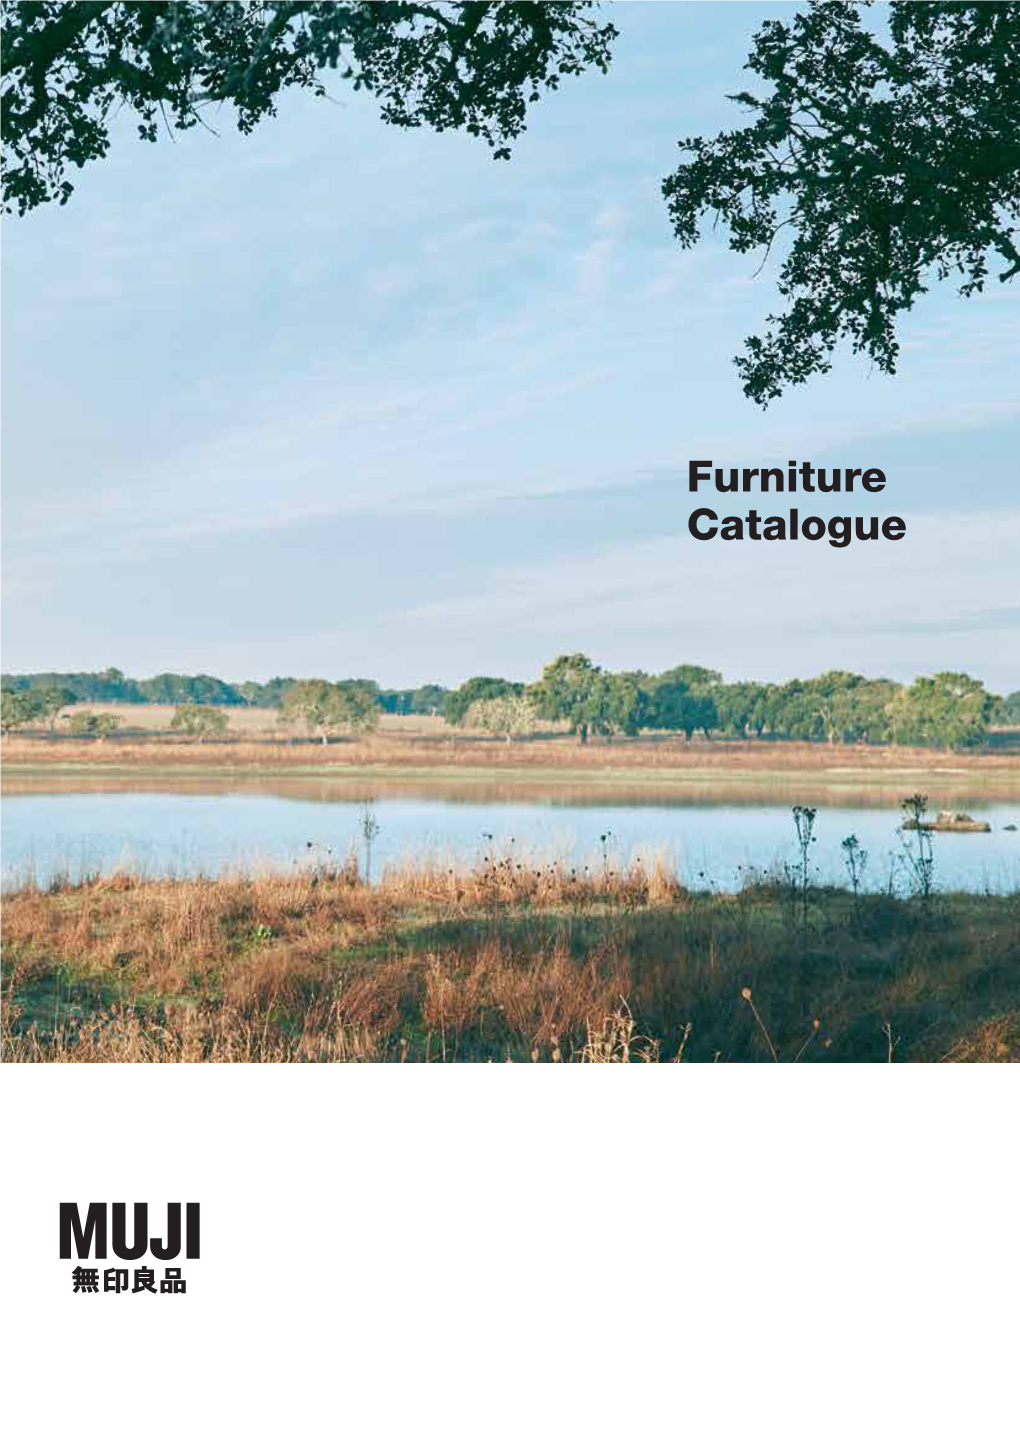 Furniture Catalogue 2017 Furniture Catalog